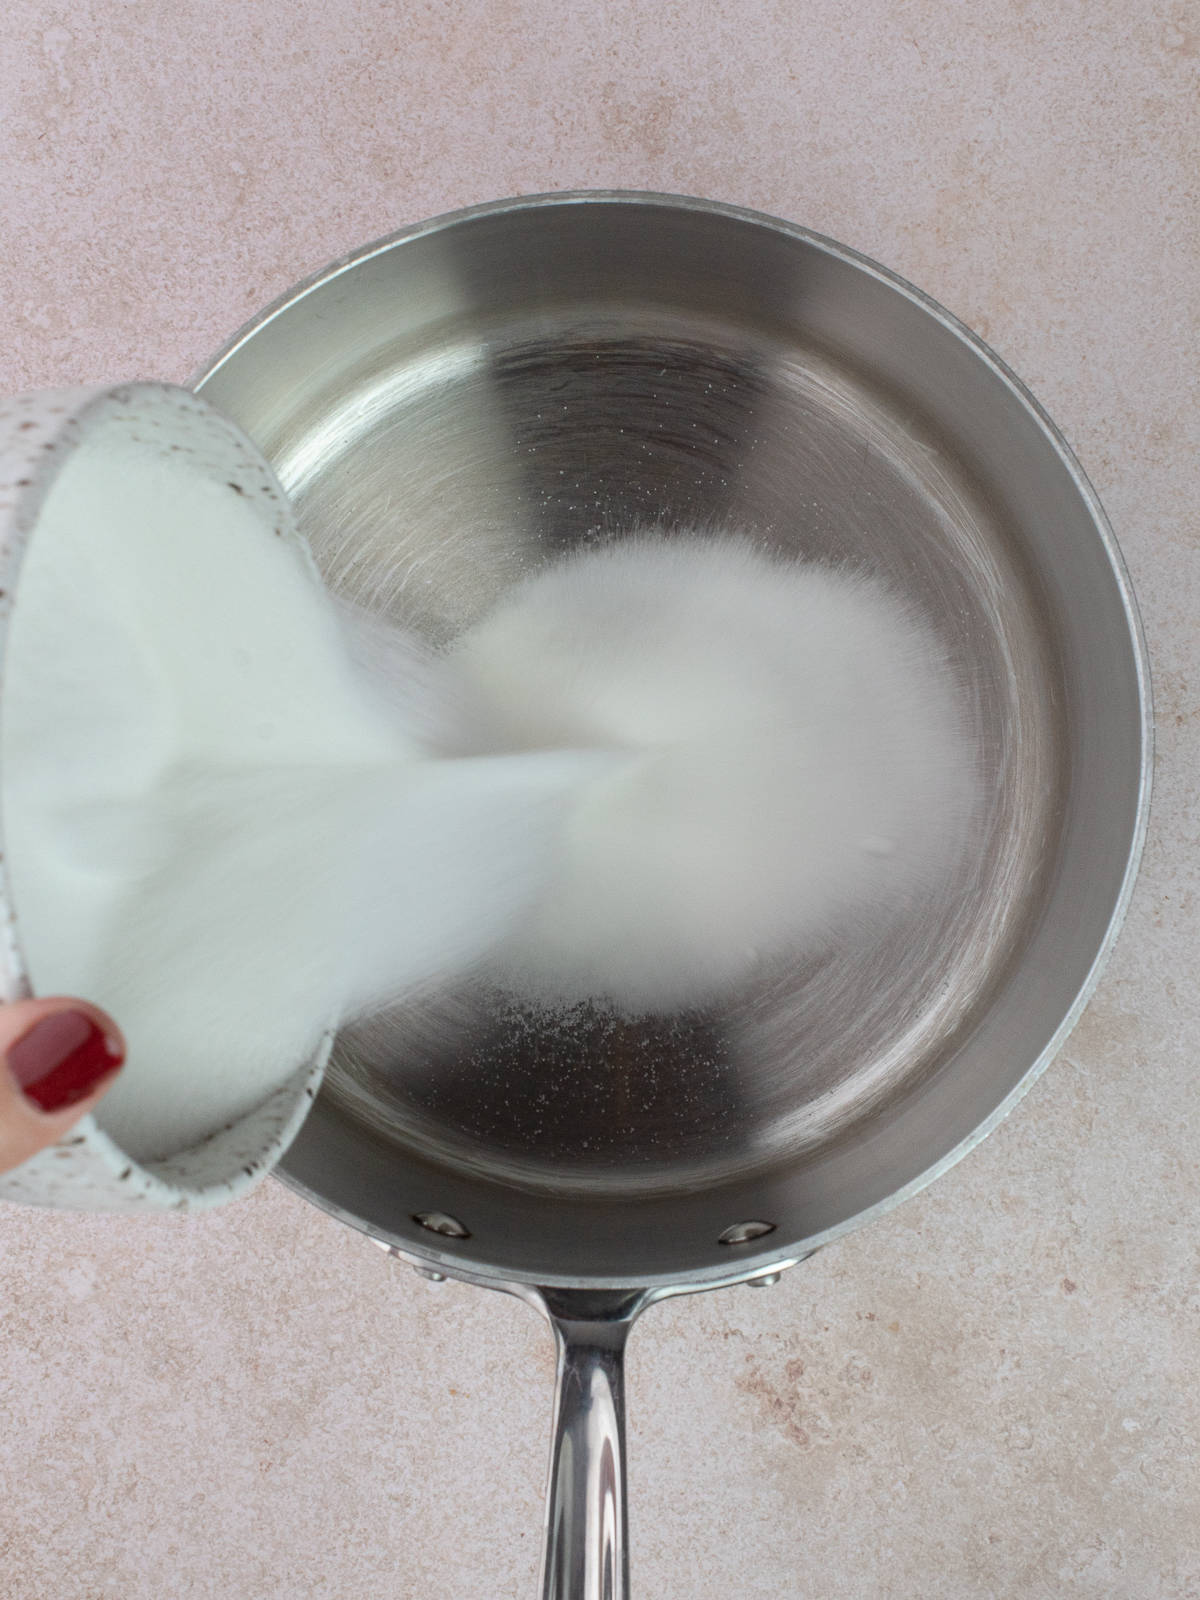 White sugar is added to a clean saucepan